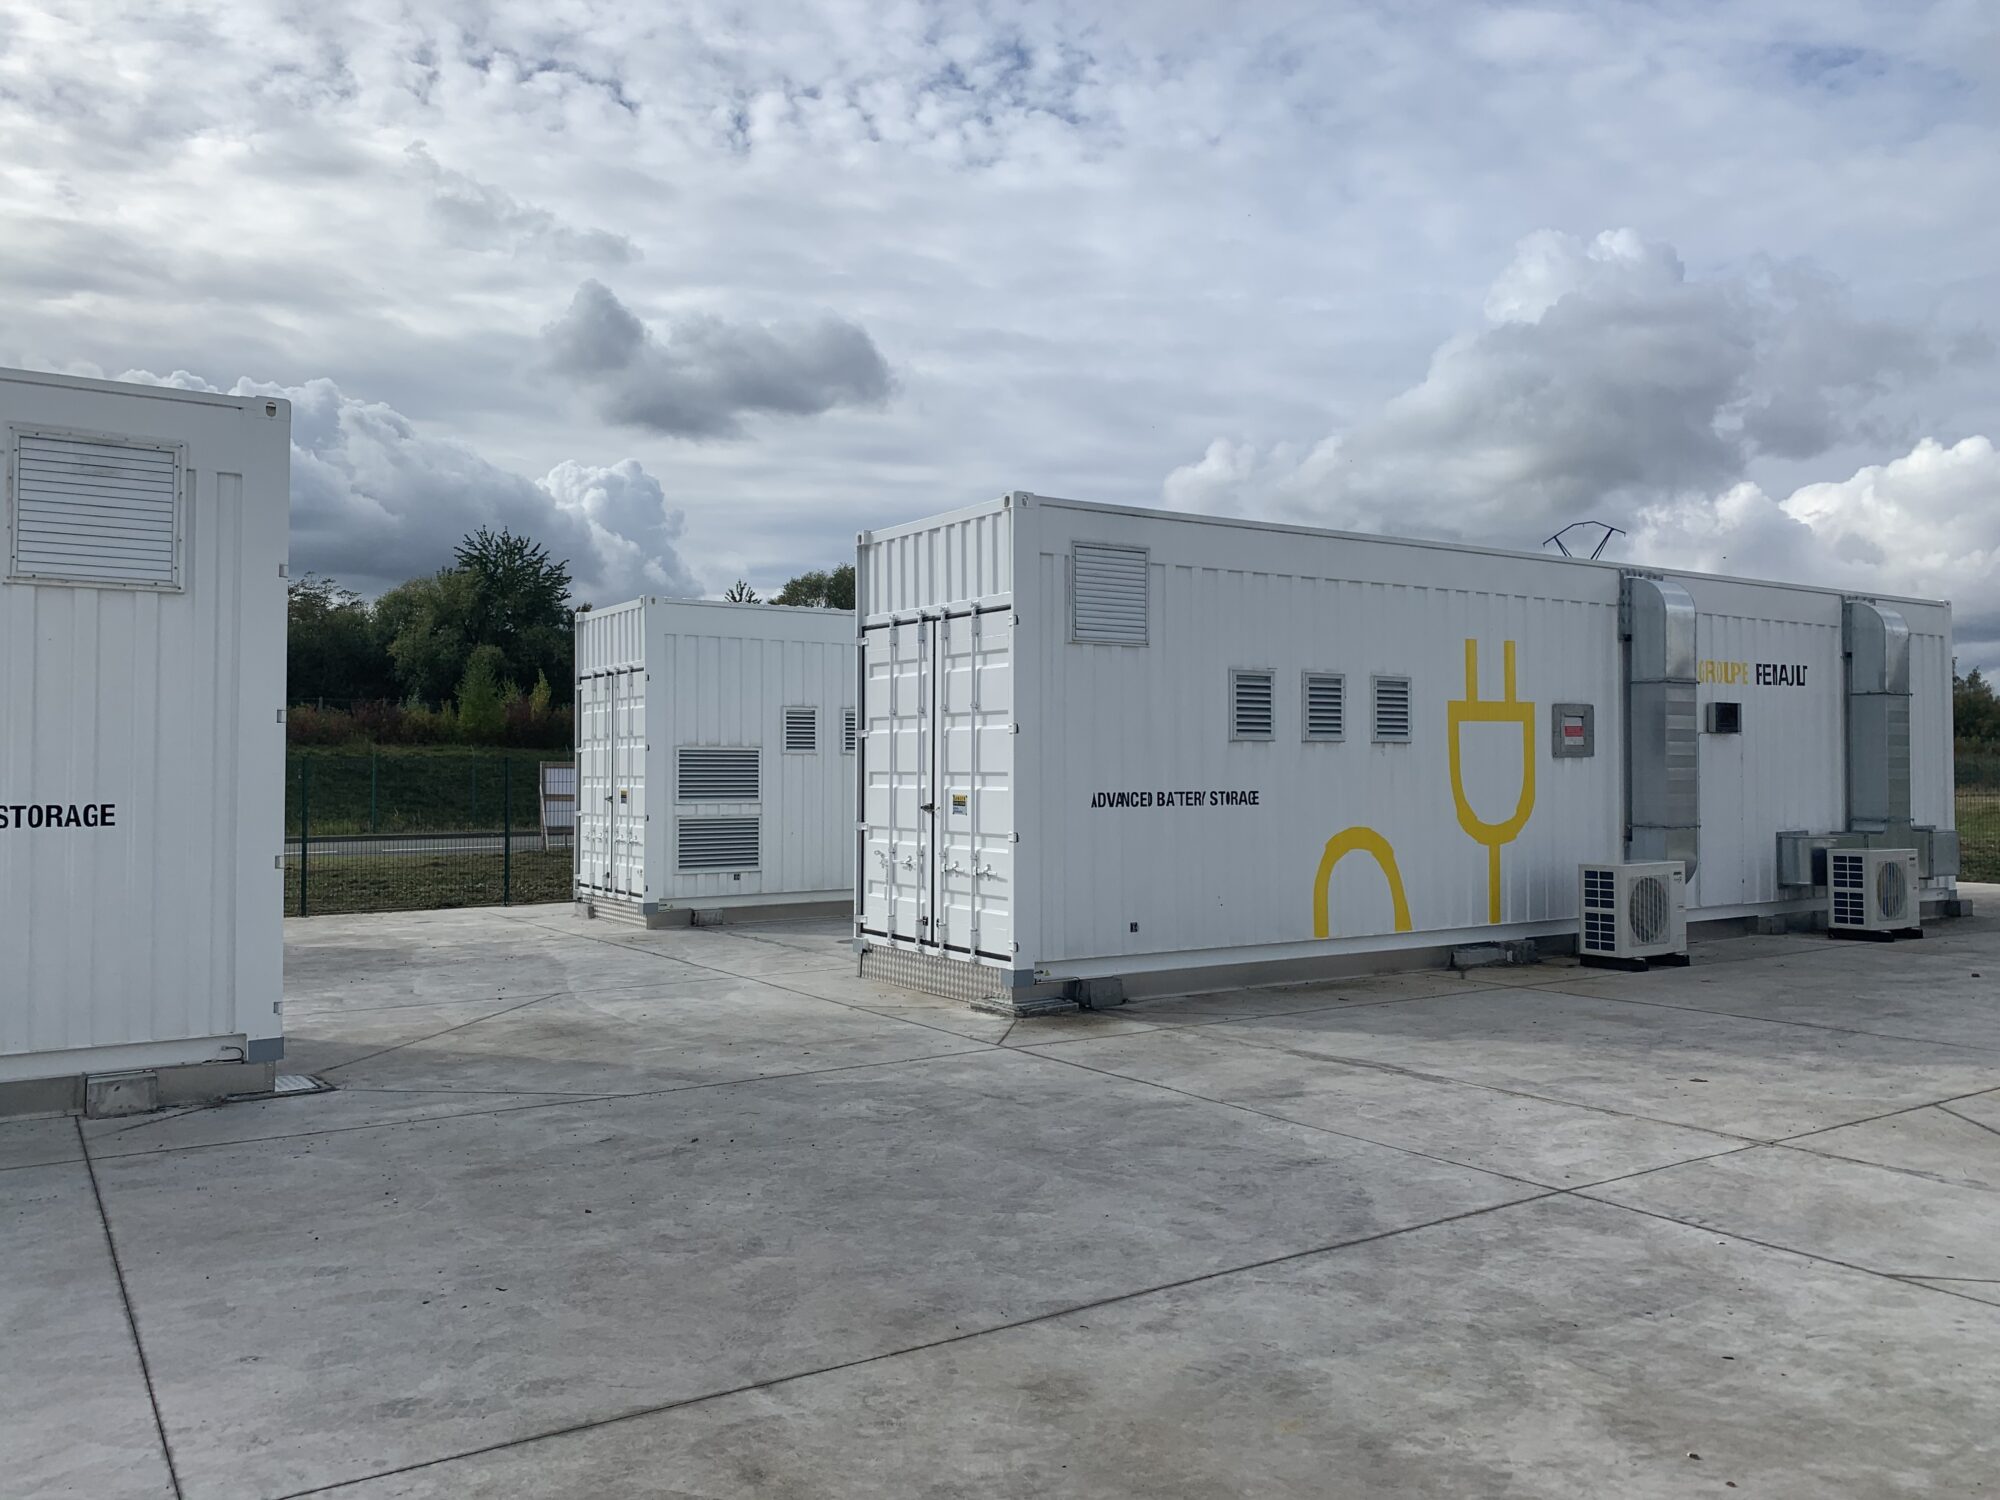 1-2020 - Advanced Battery Storage (ABS) - Douai.jpeg